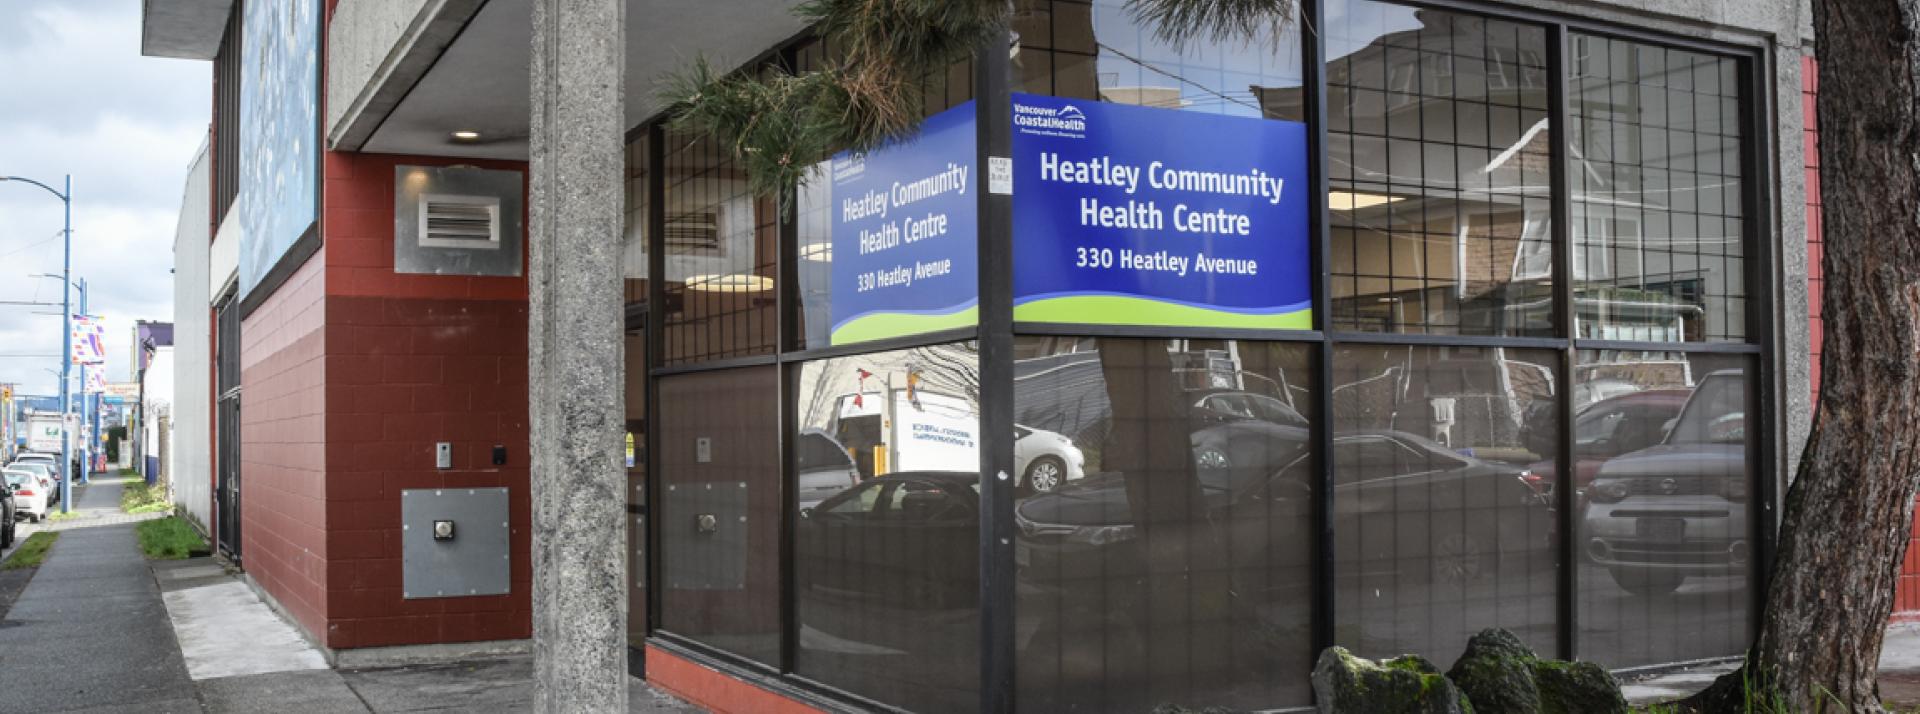 Exterior of Heatley Community Health Centre